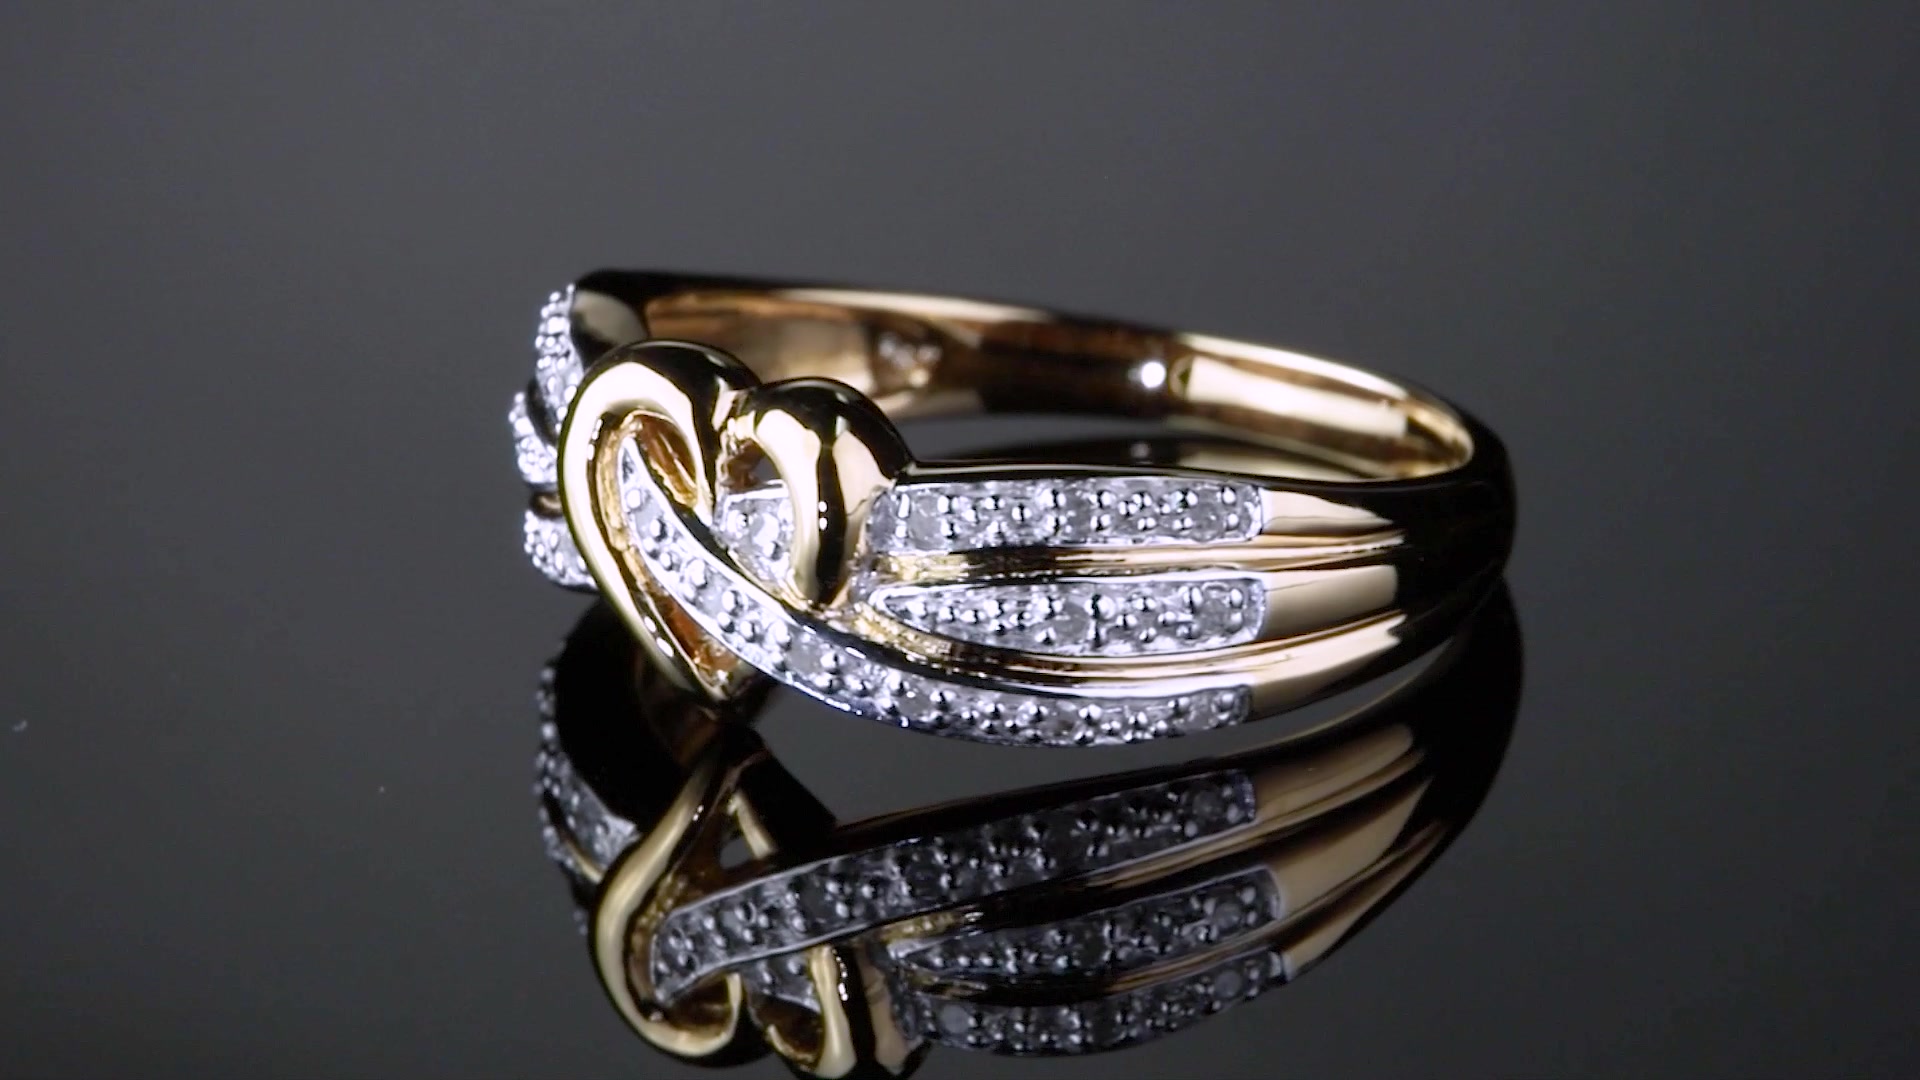 Gallery - Designer Diamonds Jewellery, Gold, Rings, Pendents, Earrings